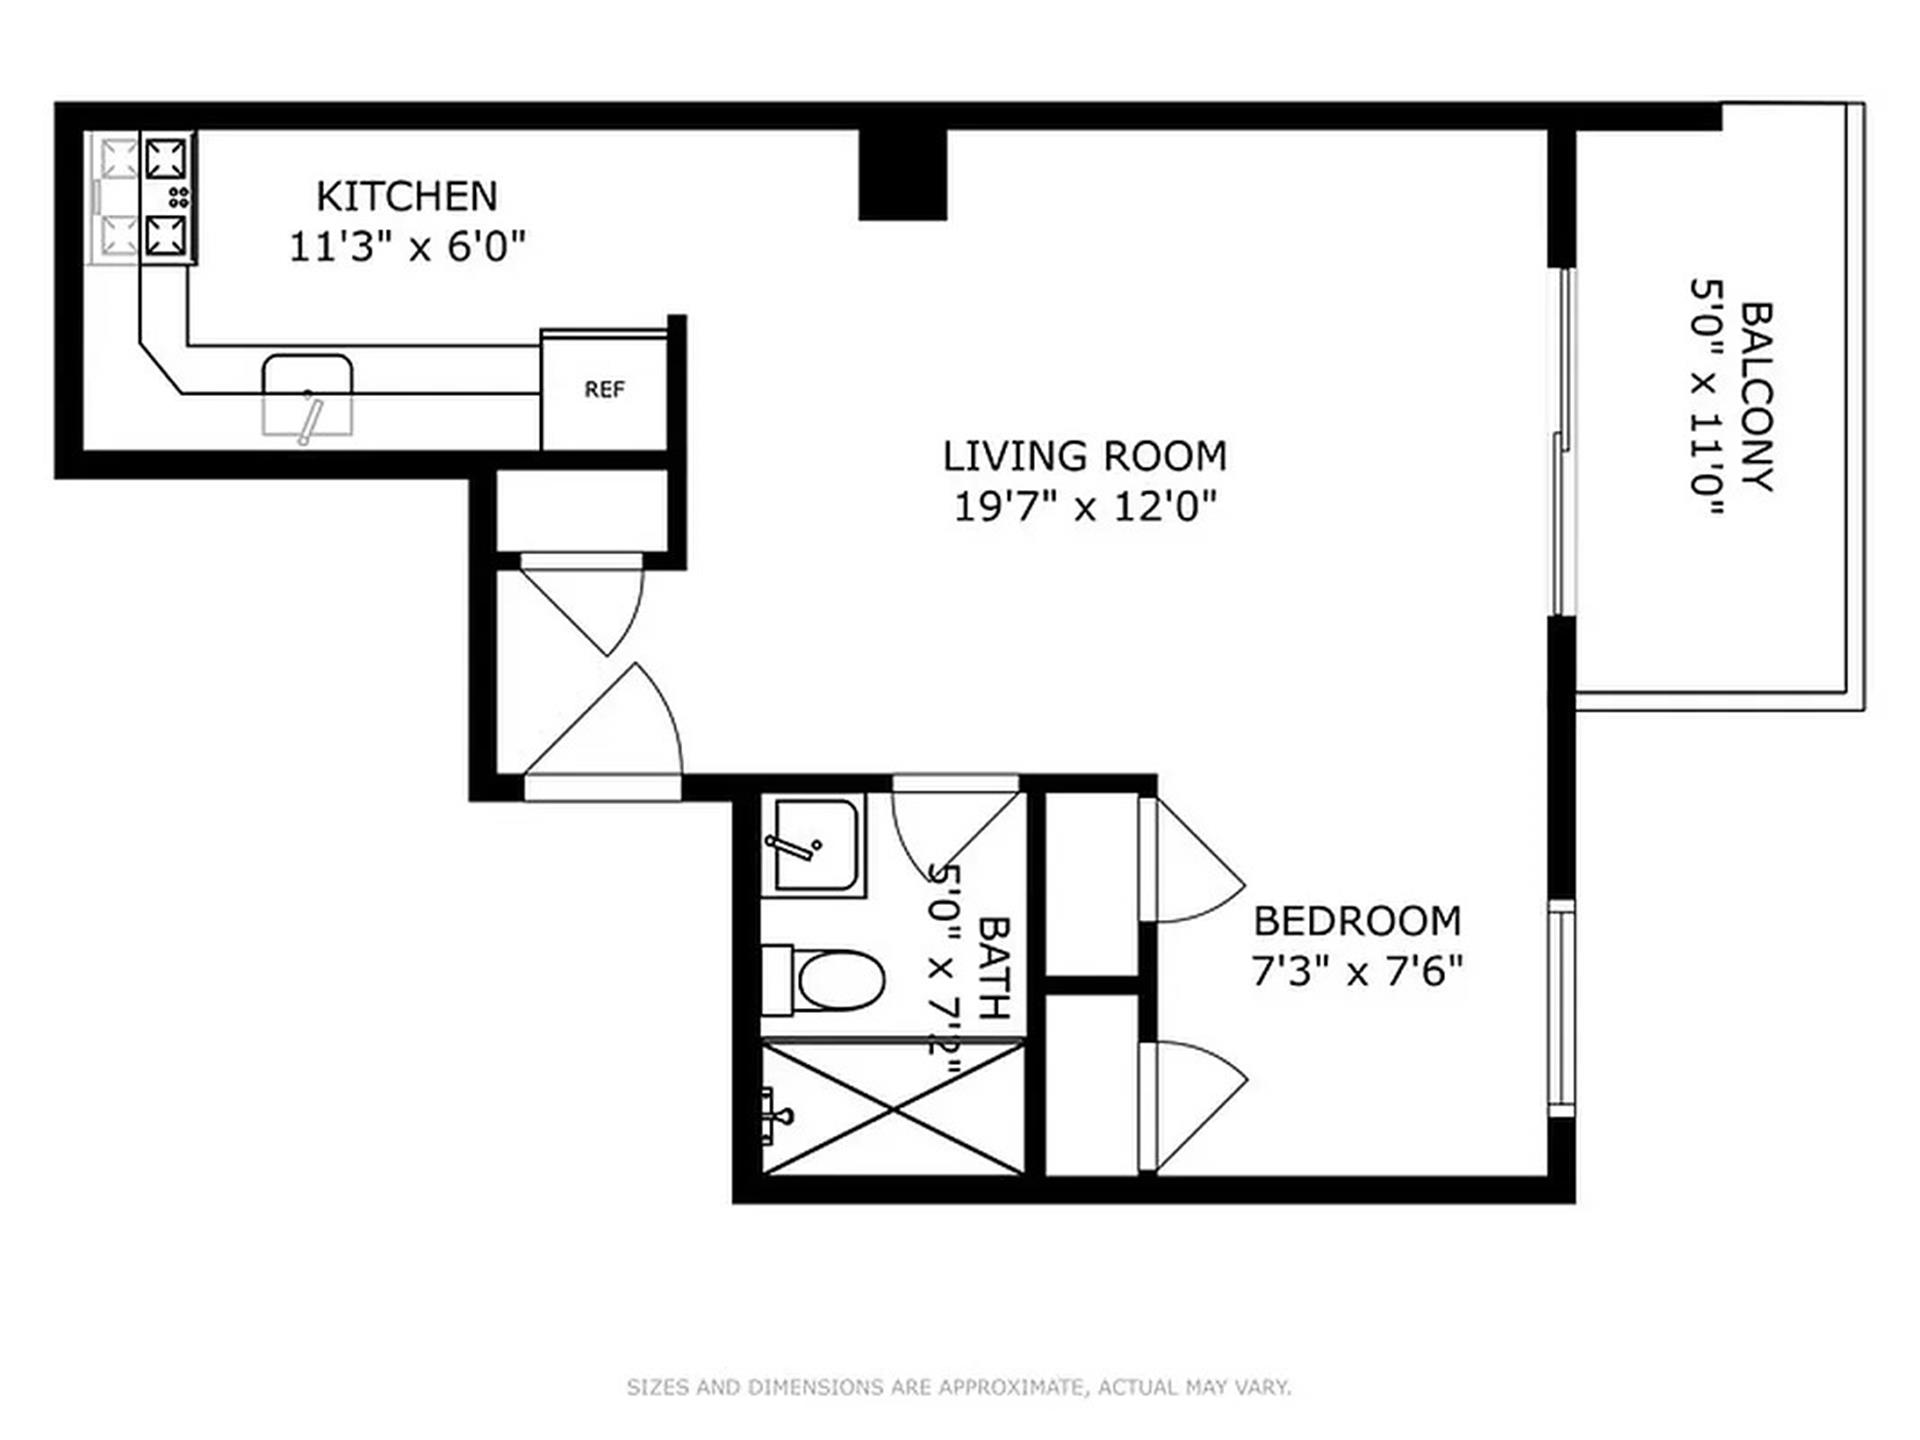 Floorplan for 9729 4th Avenue, B3